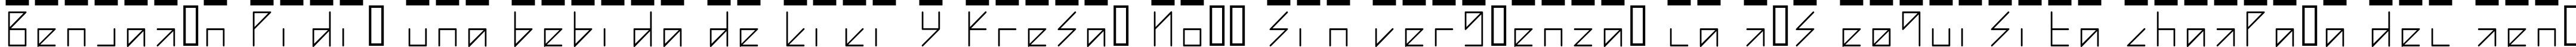 Пример написания шрифтом Pechkin текста на испанском